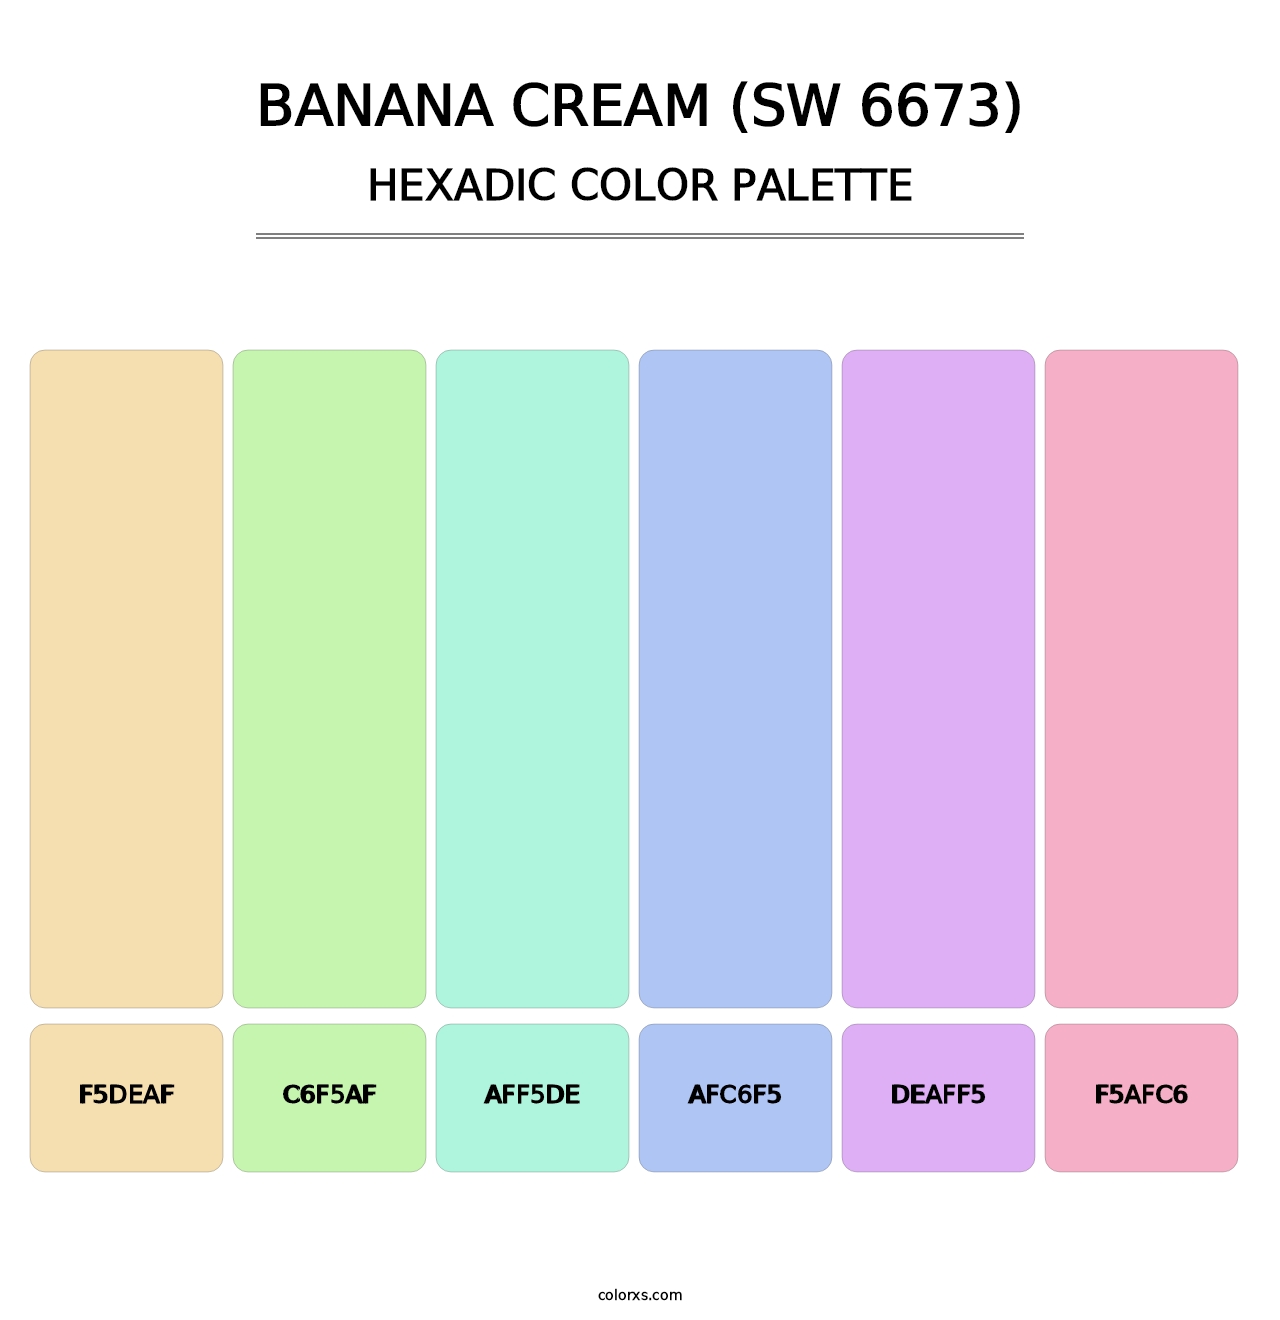 Banana Cream (SW 6673) - Hexadic Color Palette